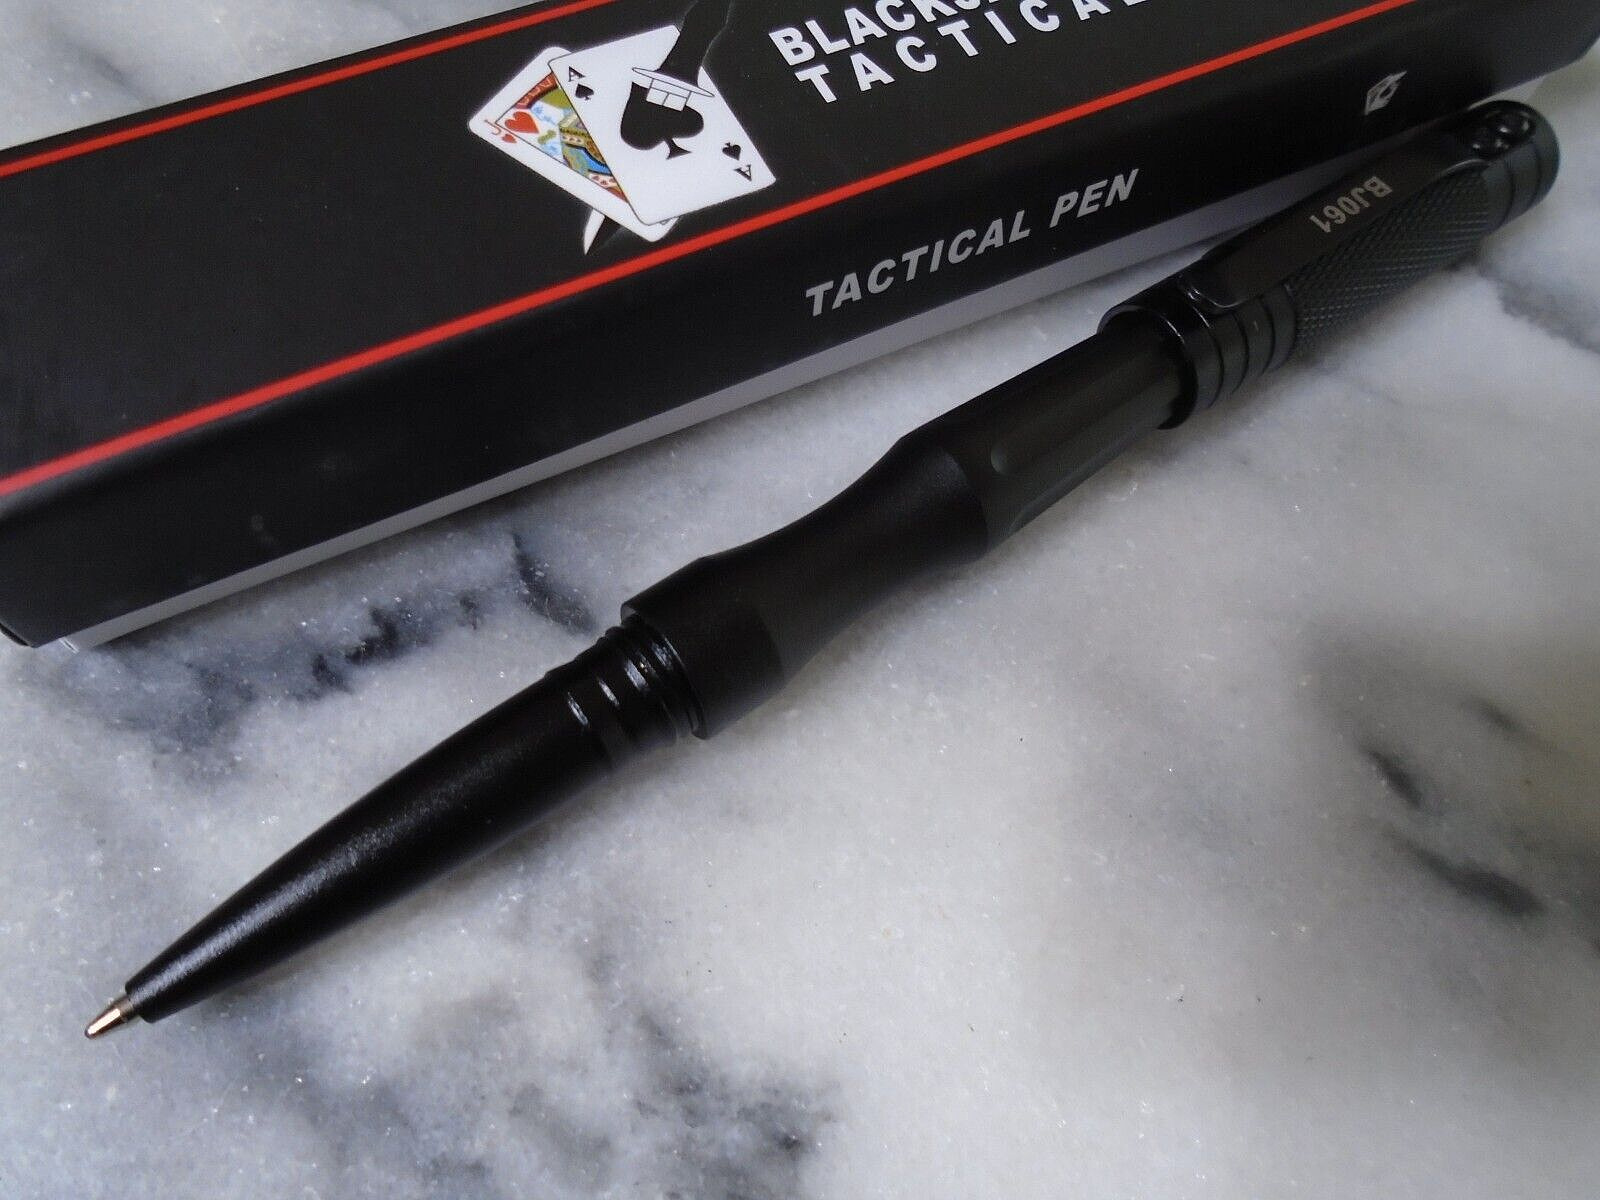 Blackjack Knives Tactical Defense Pen Cap Open BJ061 5.90